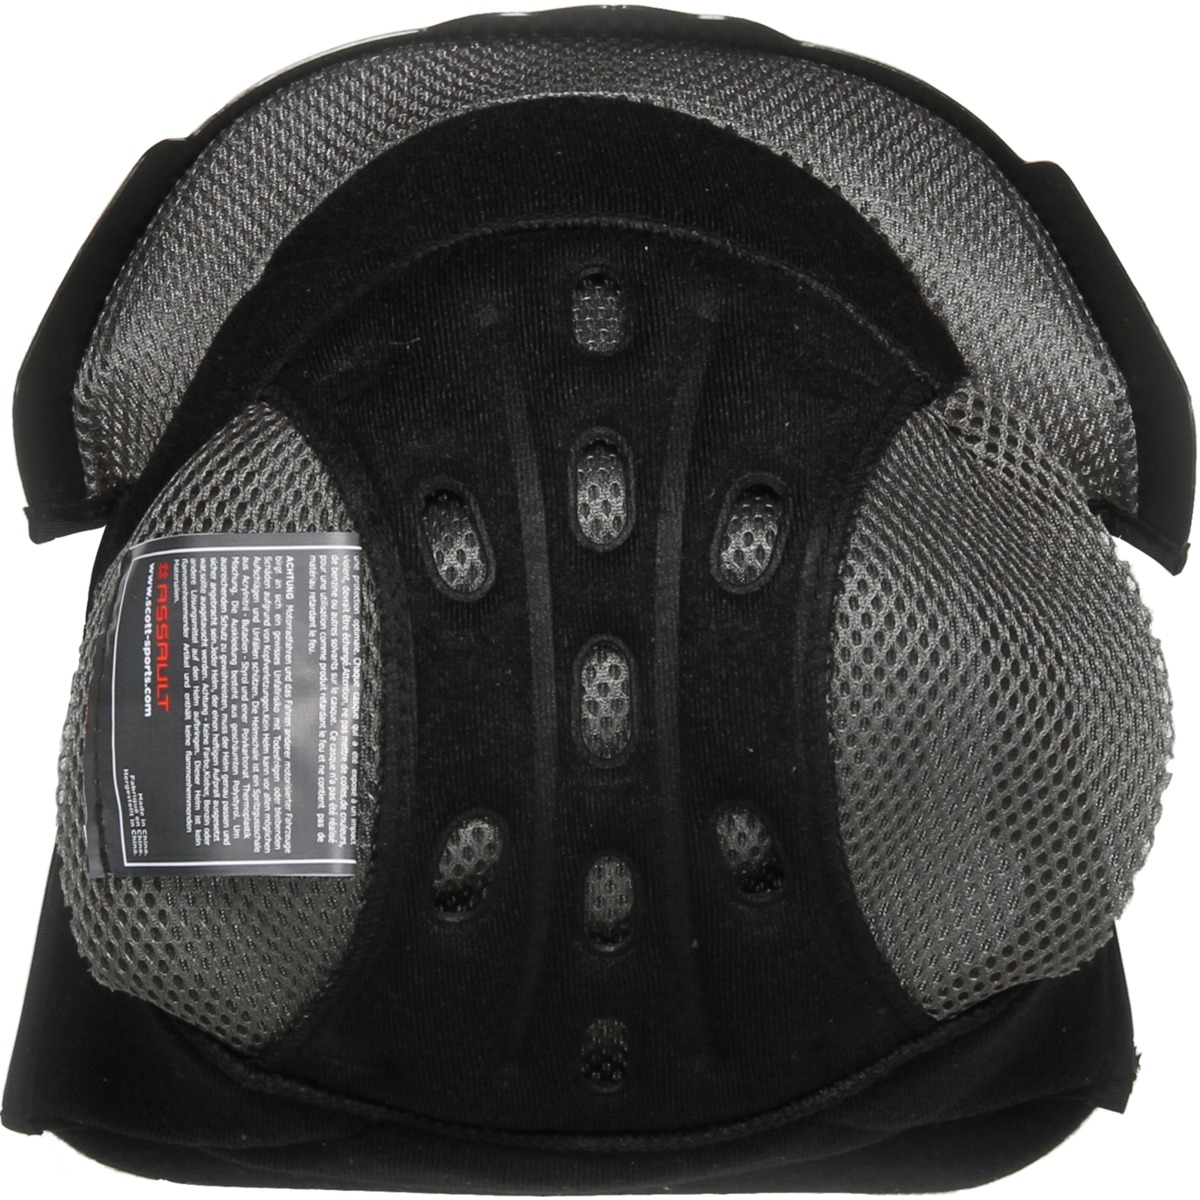 Scott 250 Check Pad Helm Wangenpolster Set schwarz/grau 